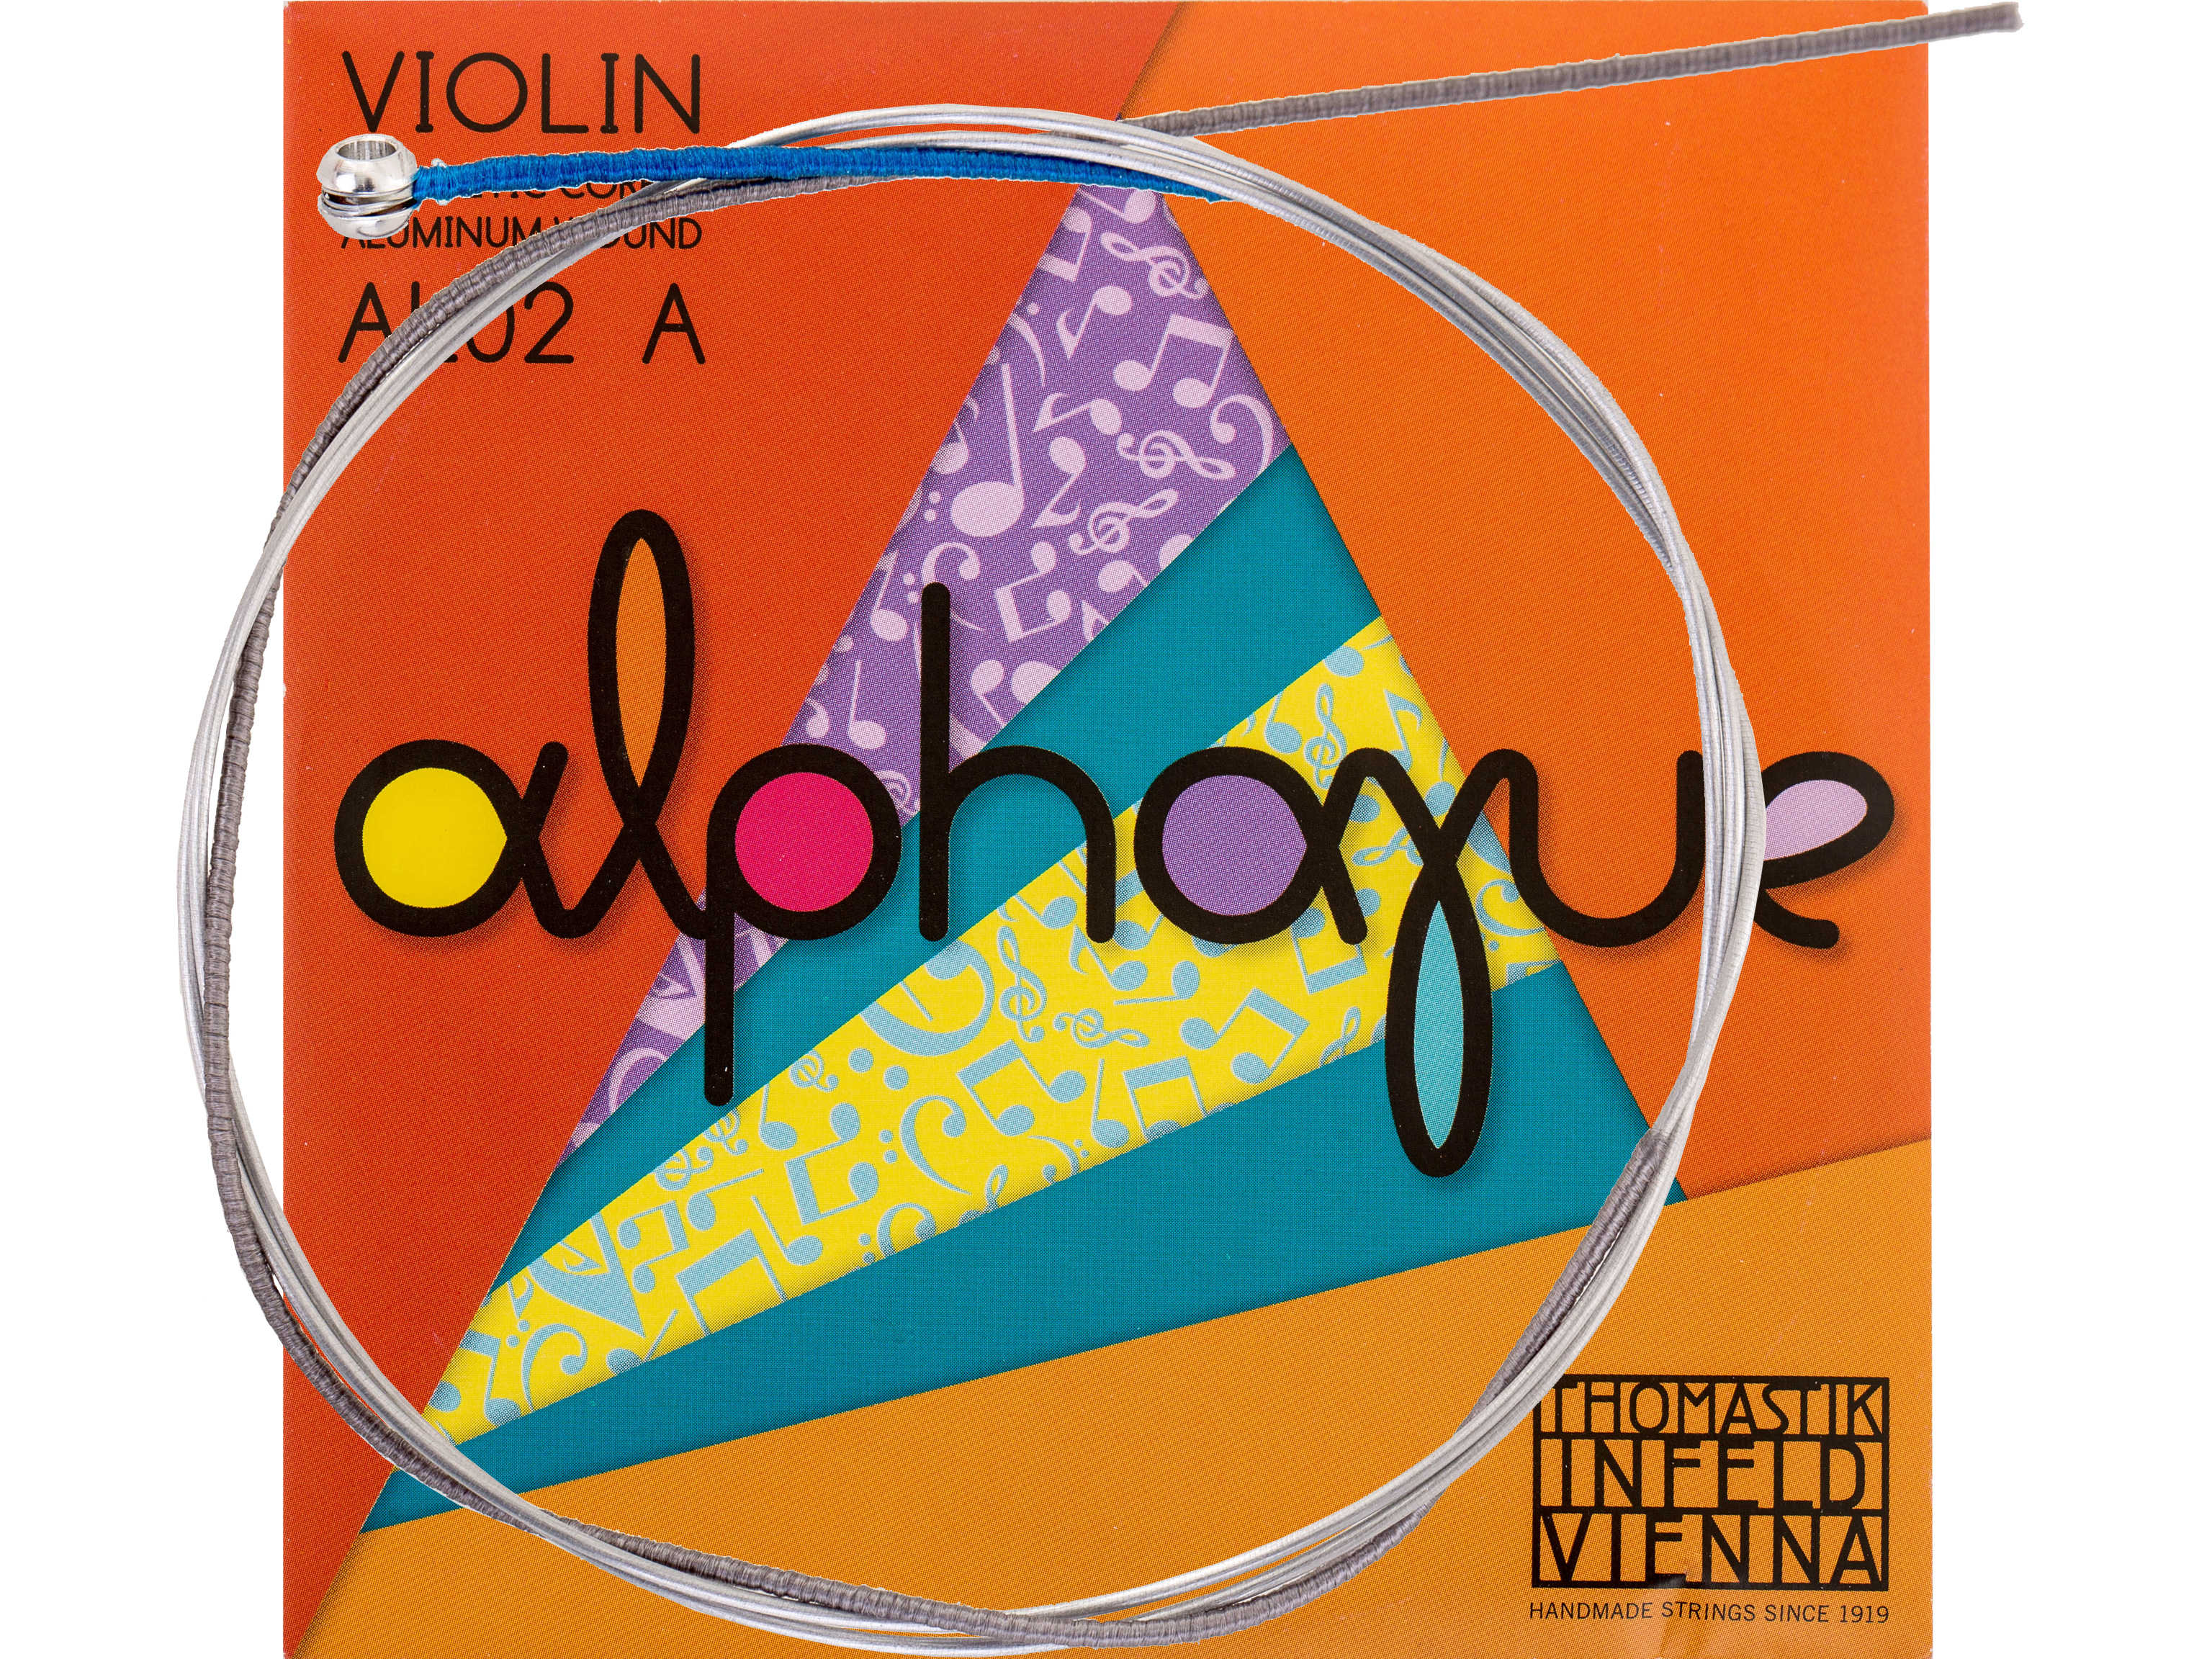 Thomastik AL02 a` Violinsaite 1/8 Alphayue